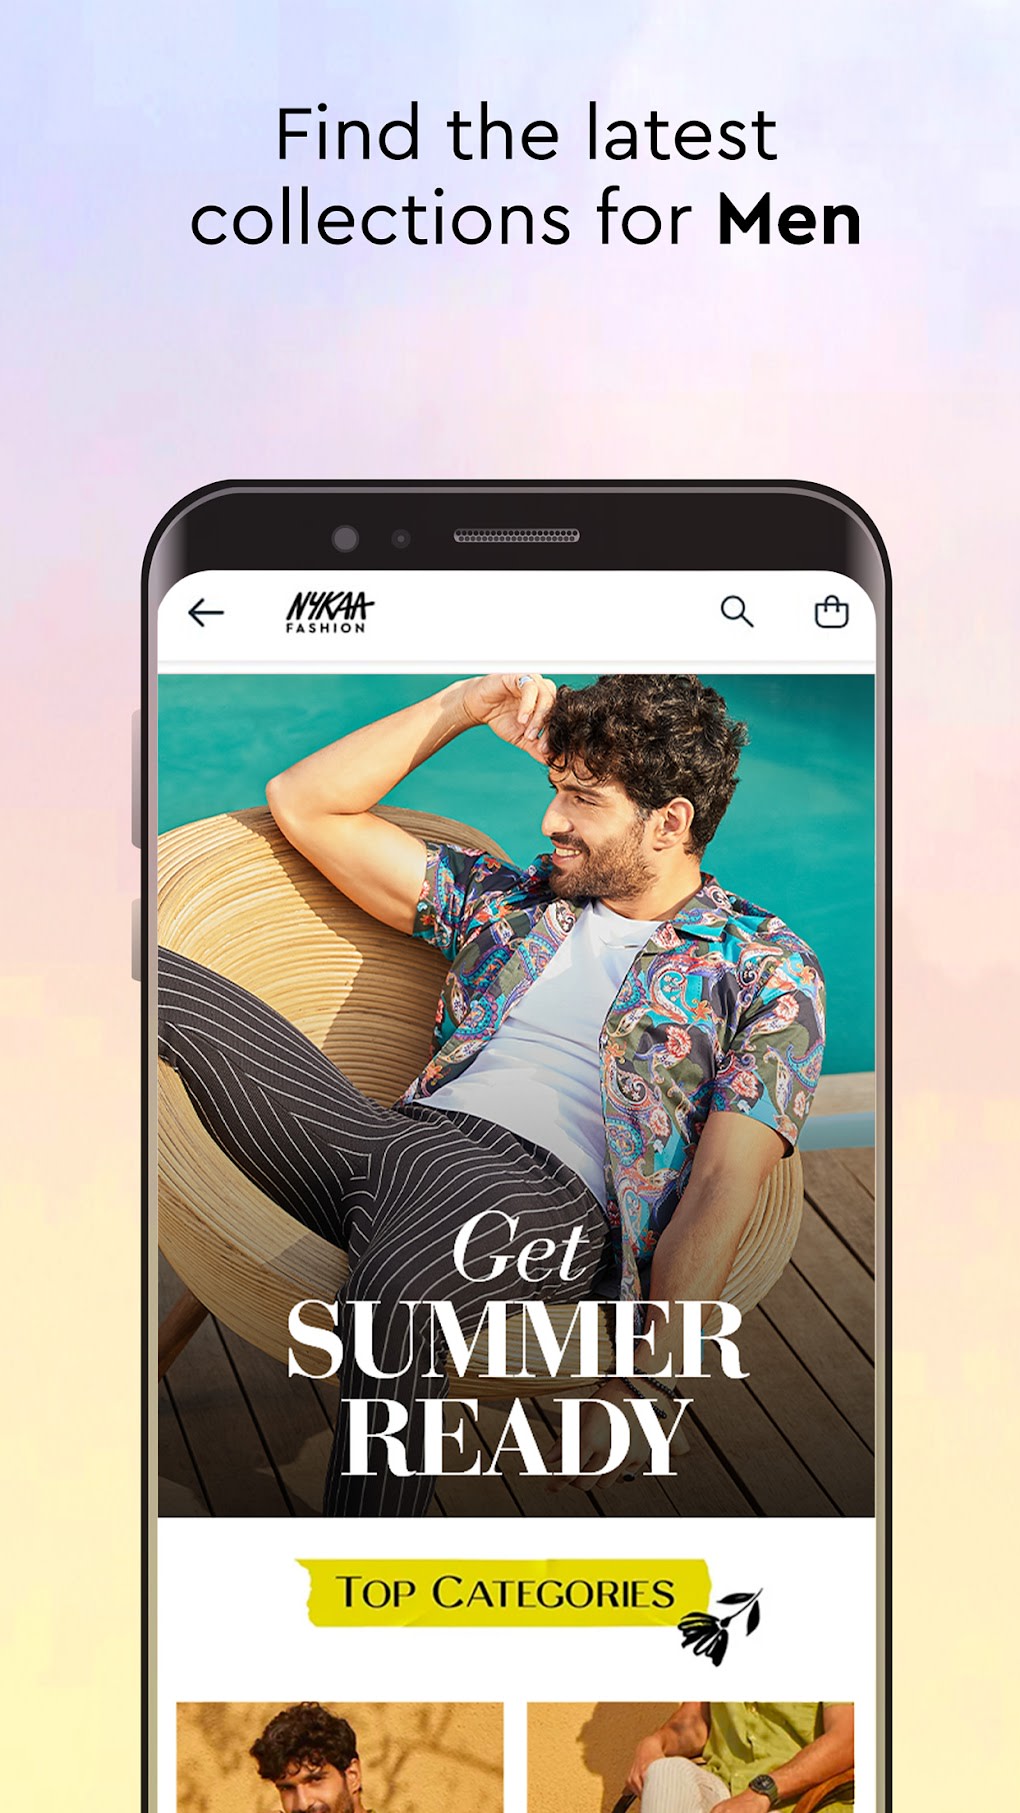 Nykaa Fashion – Shopping App - Apps on Google Play